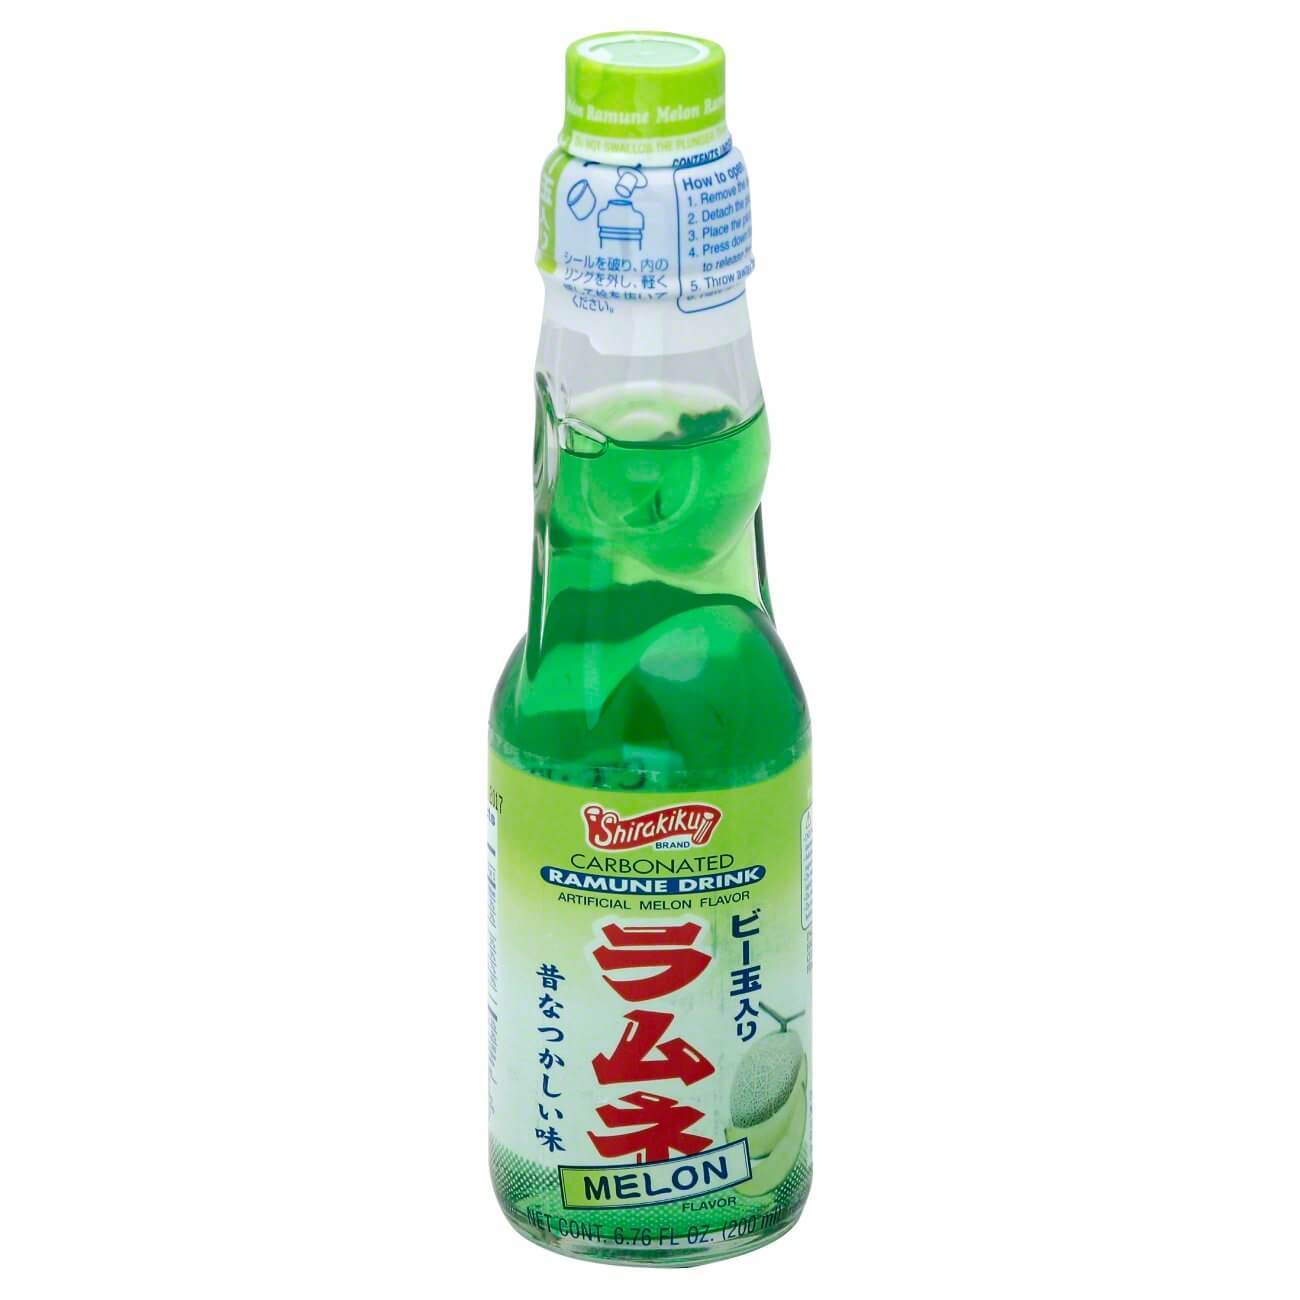 Shirakiku Carbonated Ramune Drink (Melon)